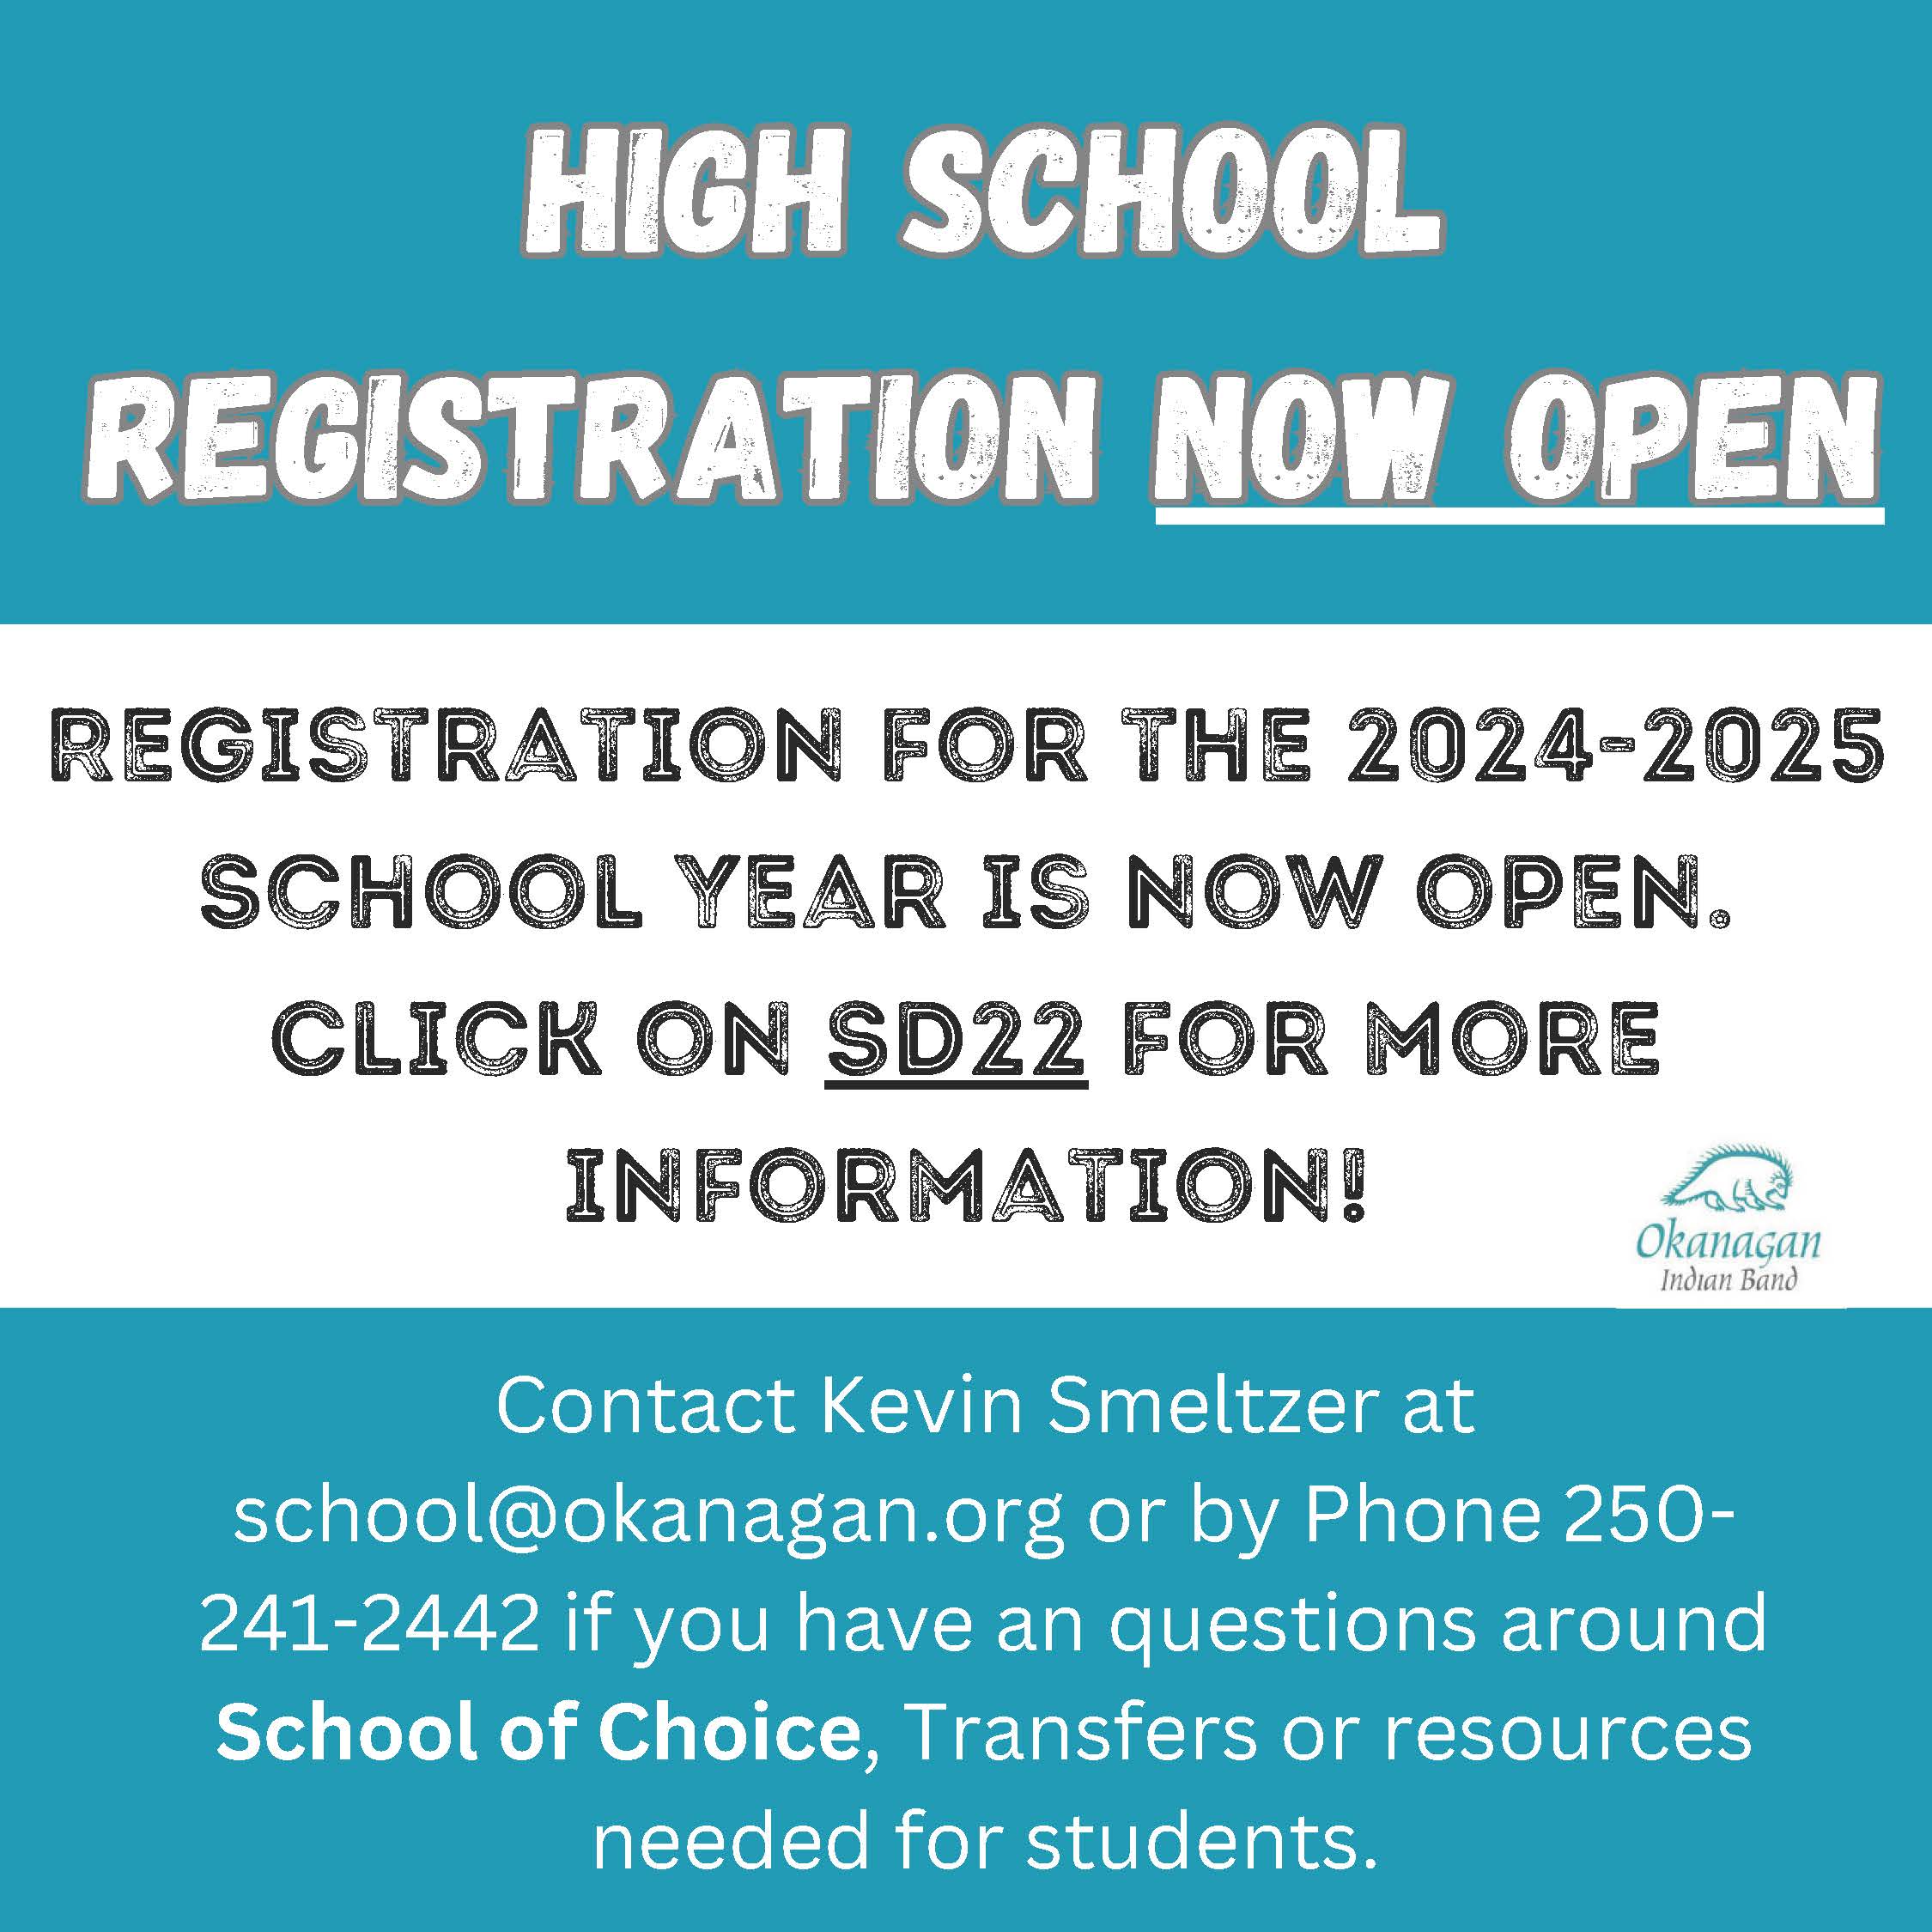 Highschool Registration is now open